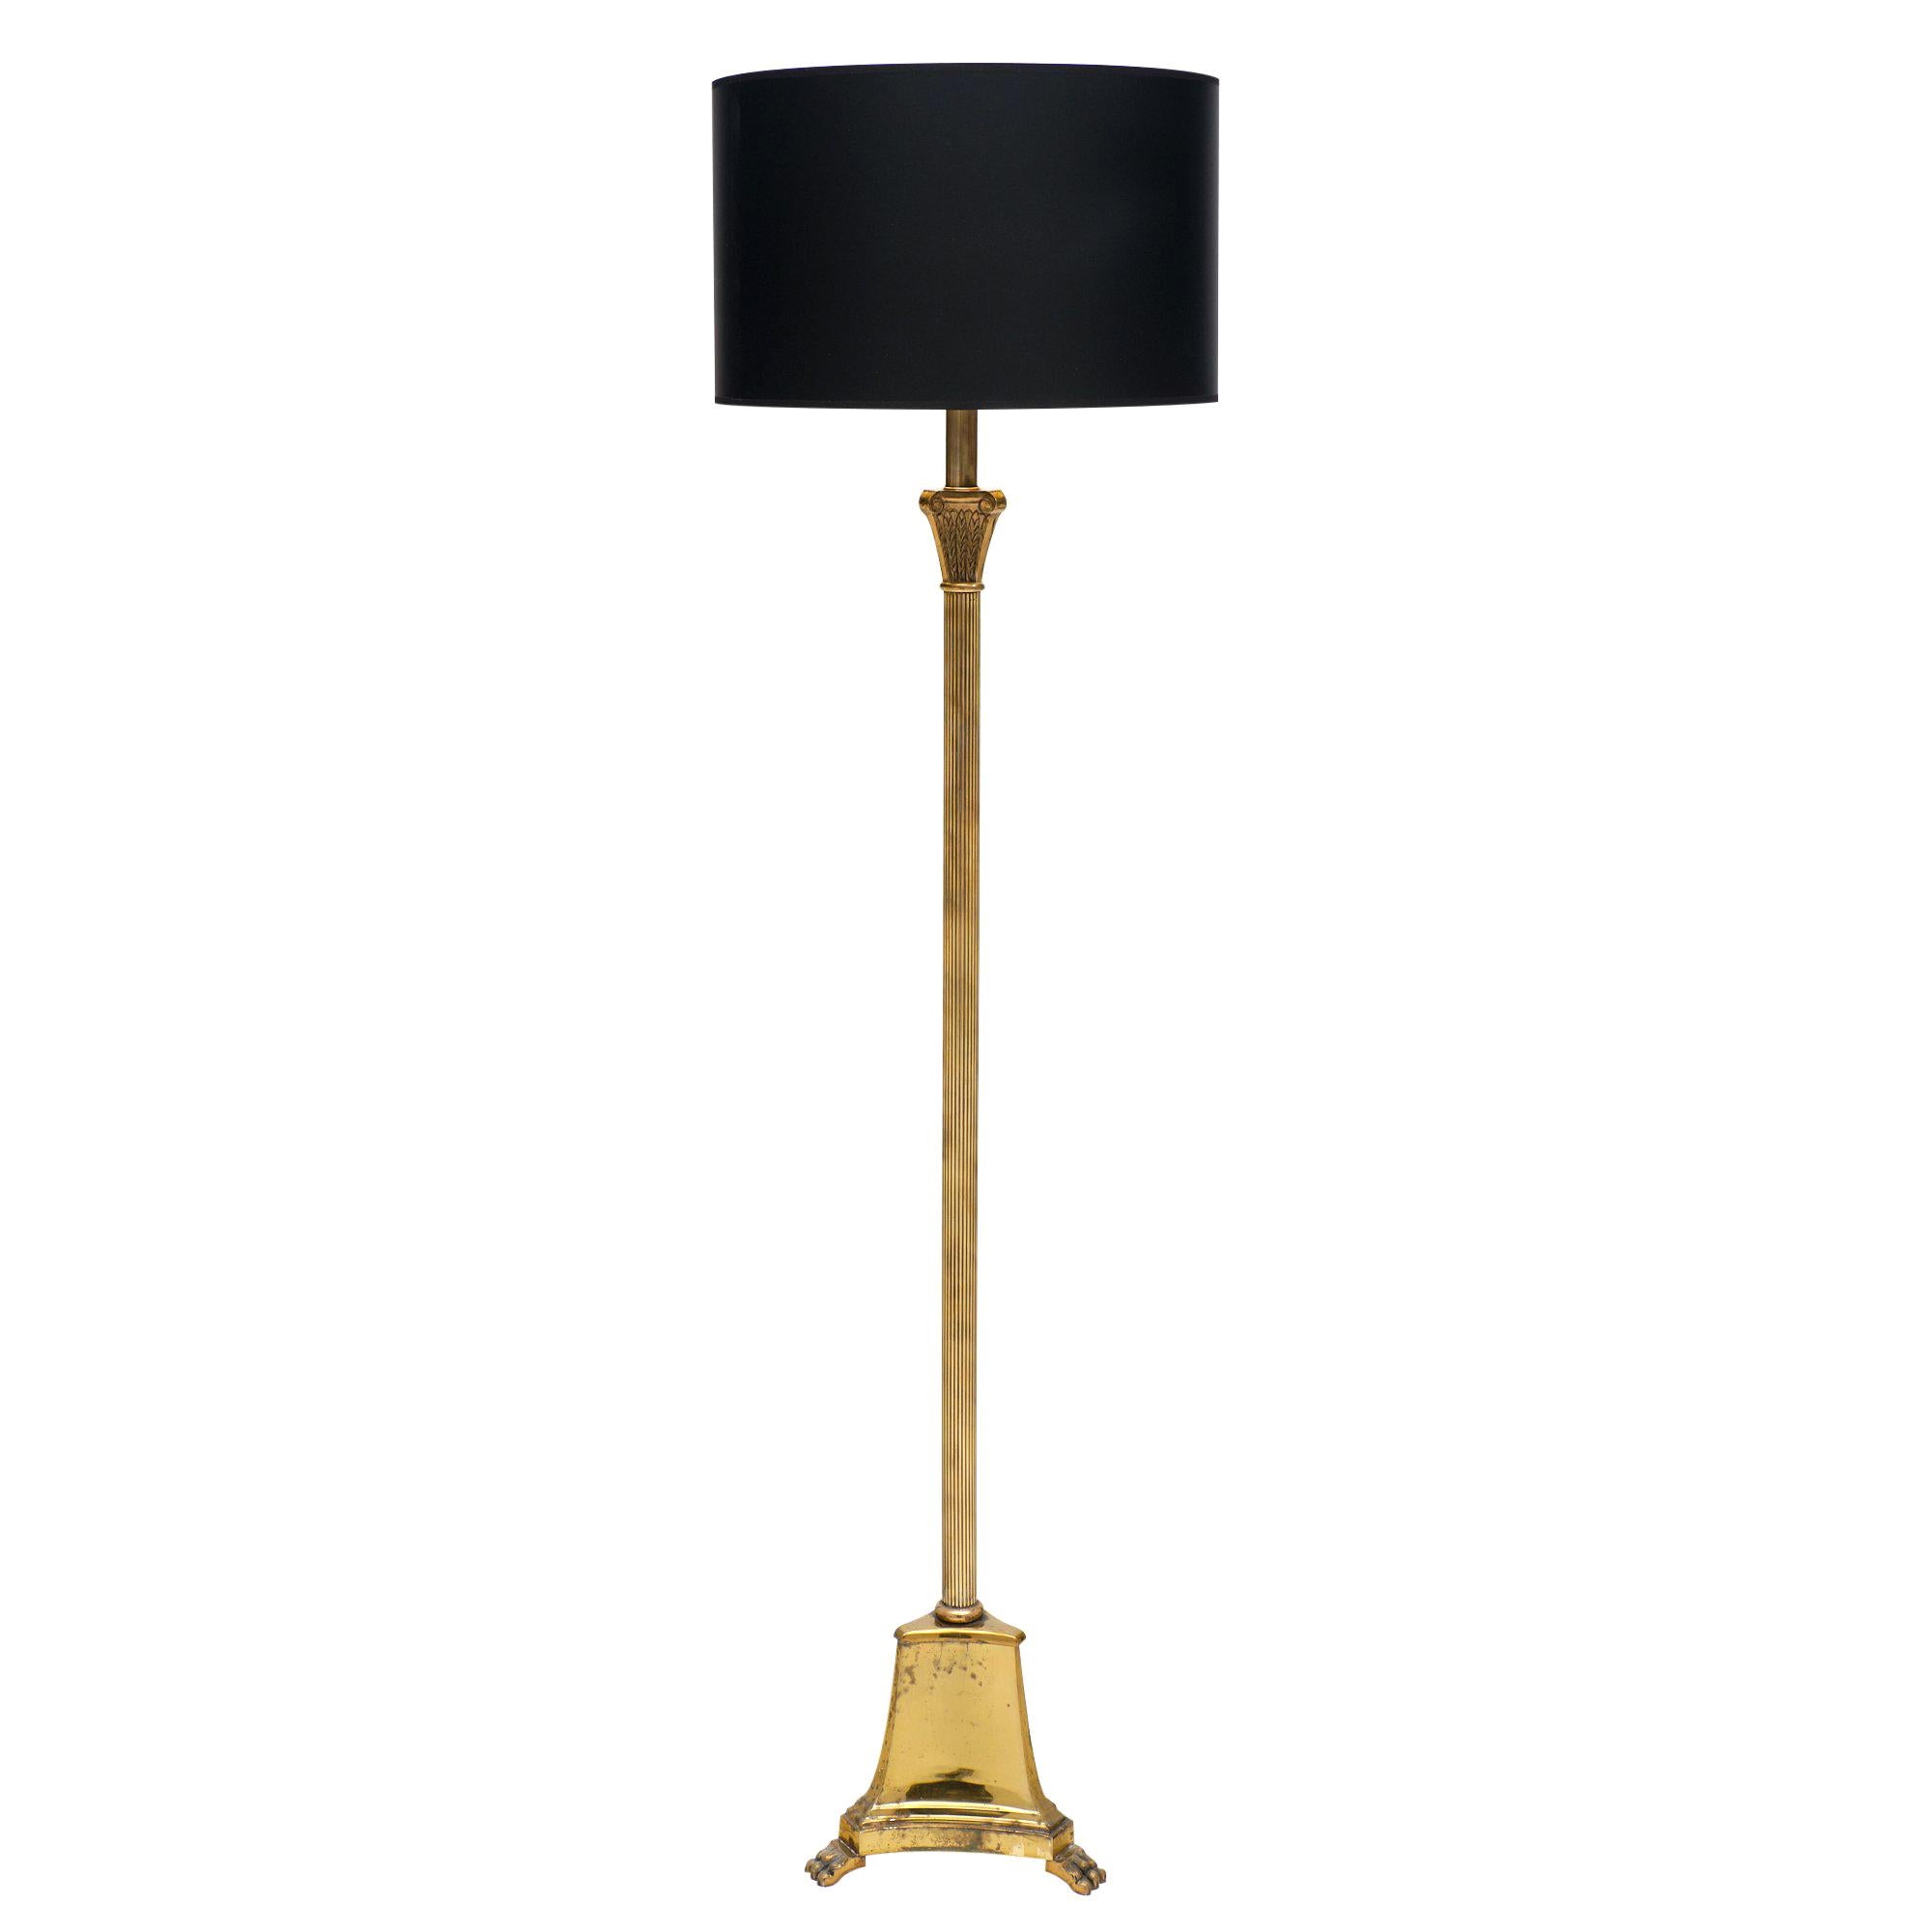 Art Deco Period French Floor Lamp